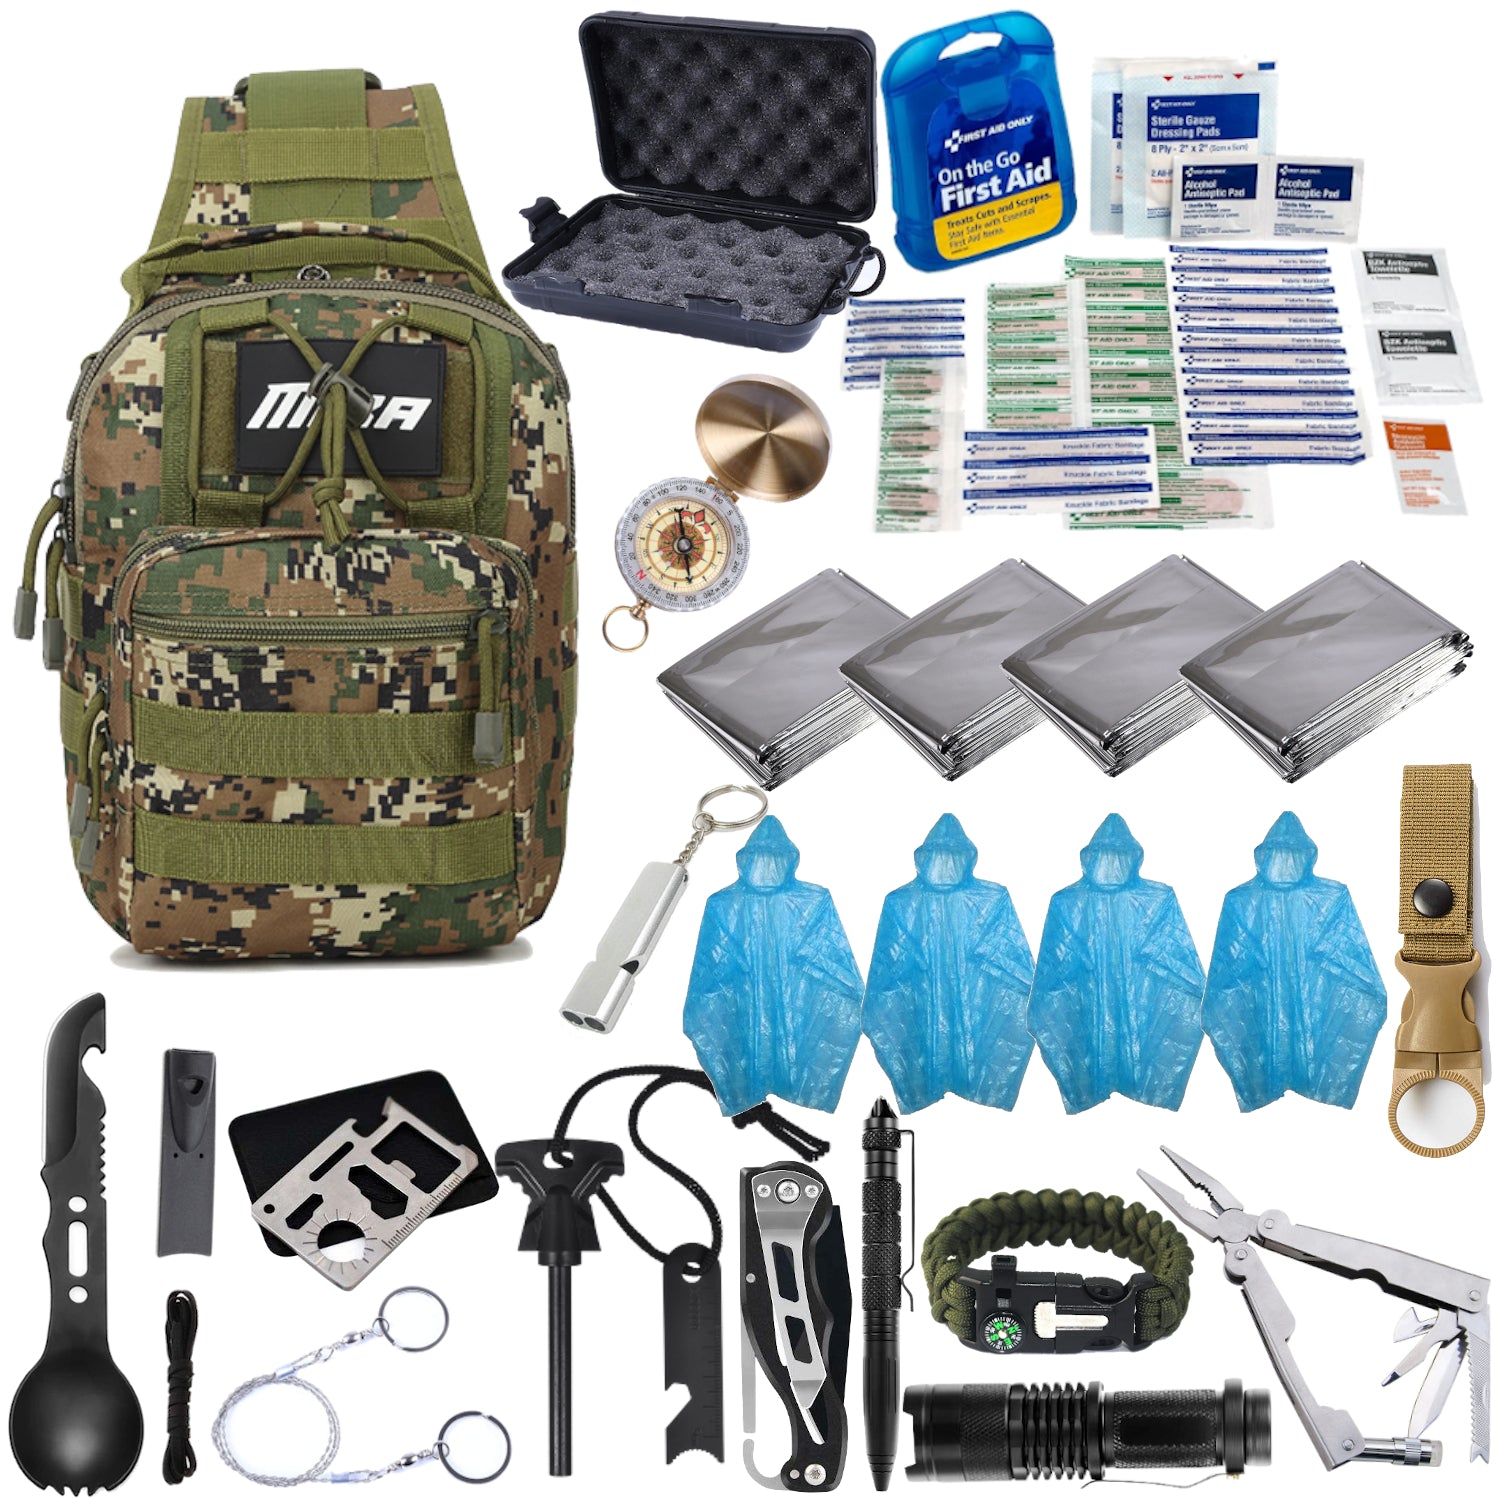 MIKA Premium 4 People Survival Gear and Equipment Shoulder Bag, 51